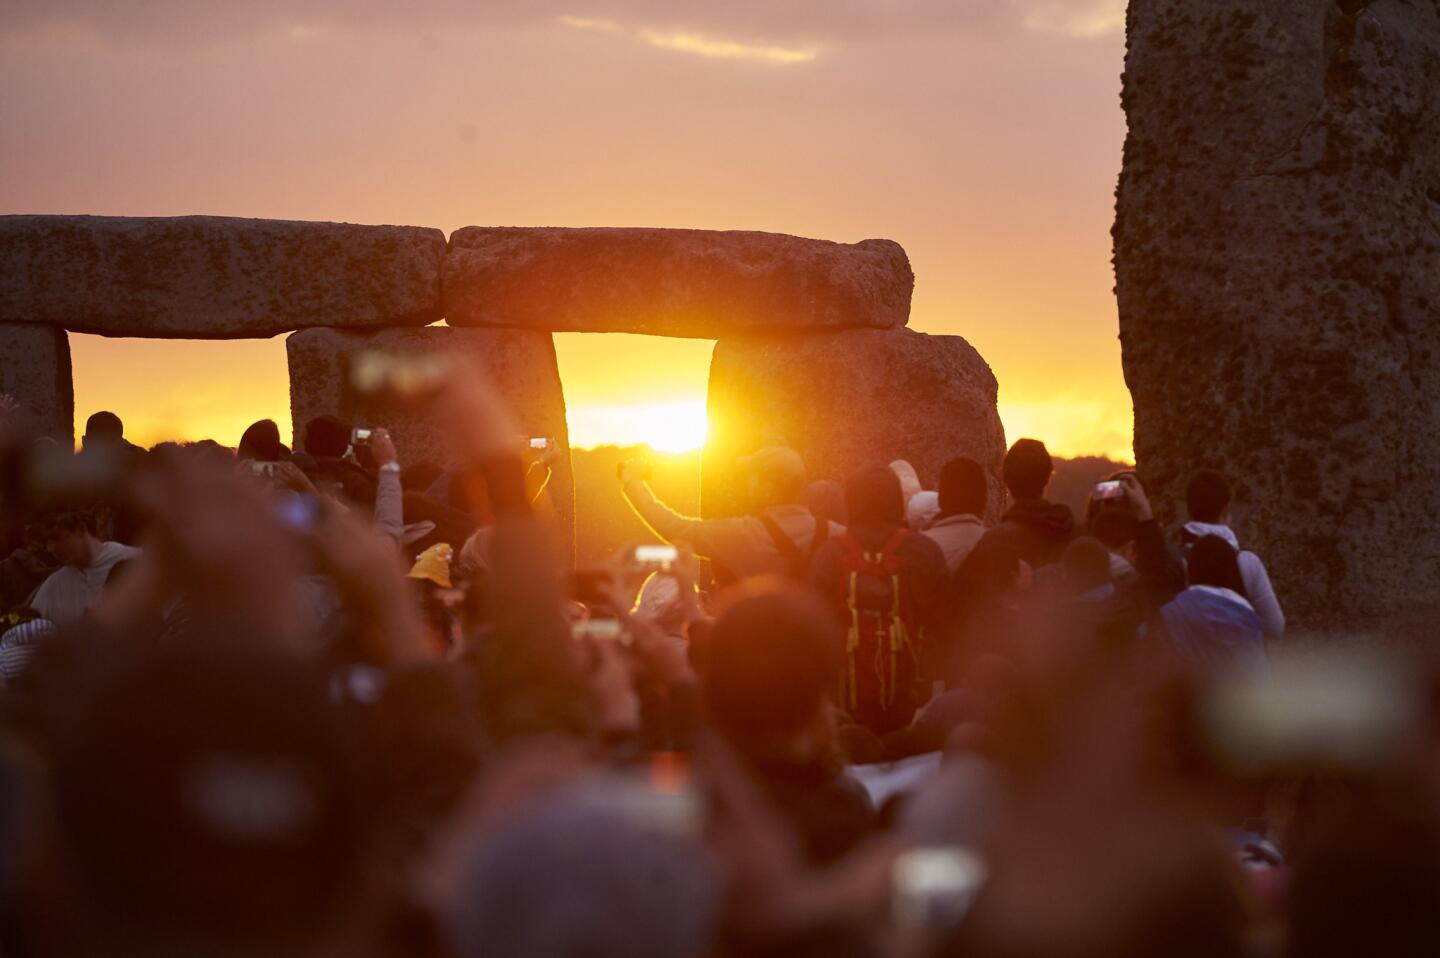 Solstice at Stonehenge